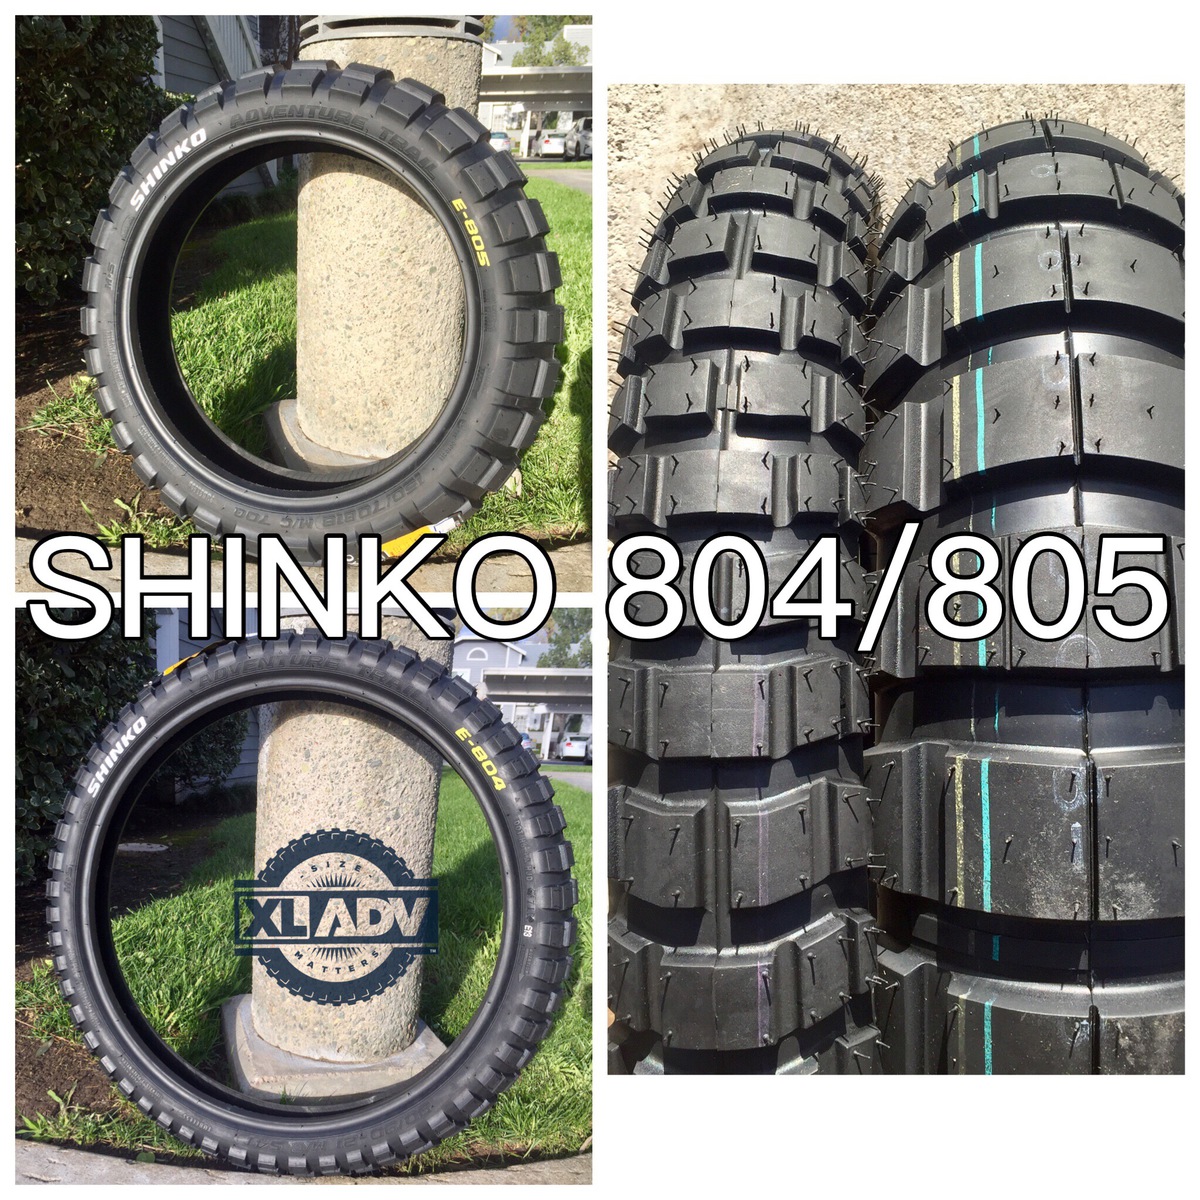 Shinko 804/805 - Gear, Farkles and Equipment - XL Adventure